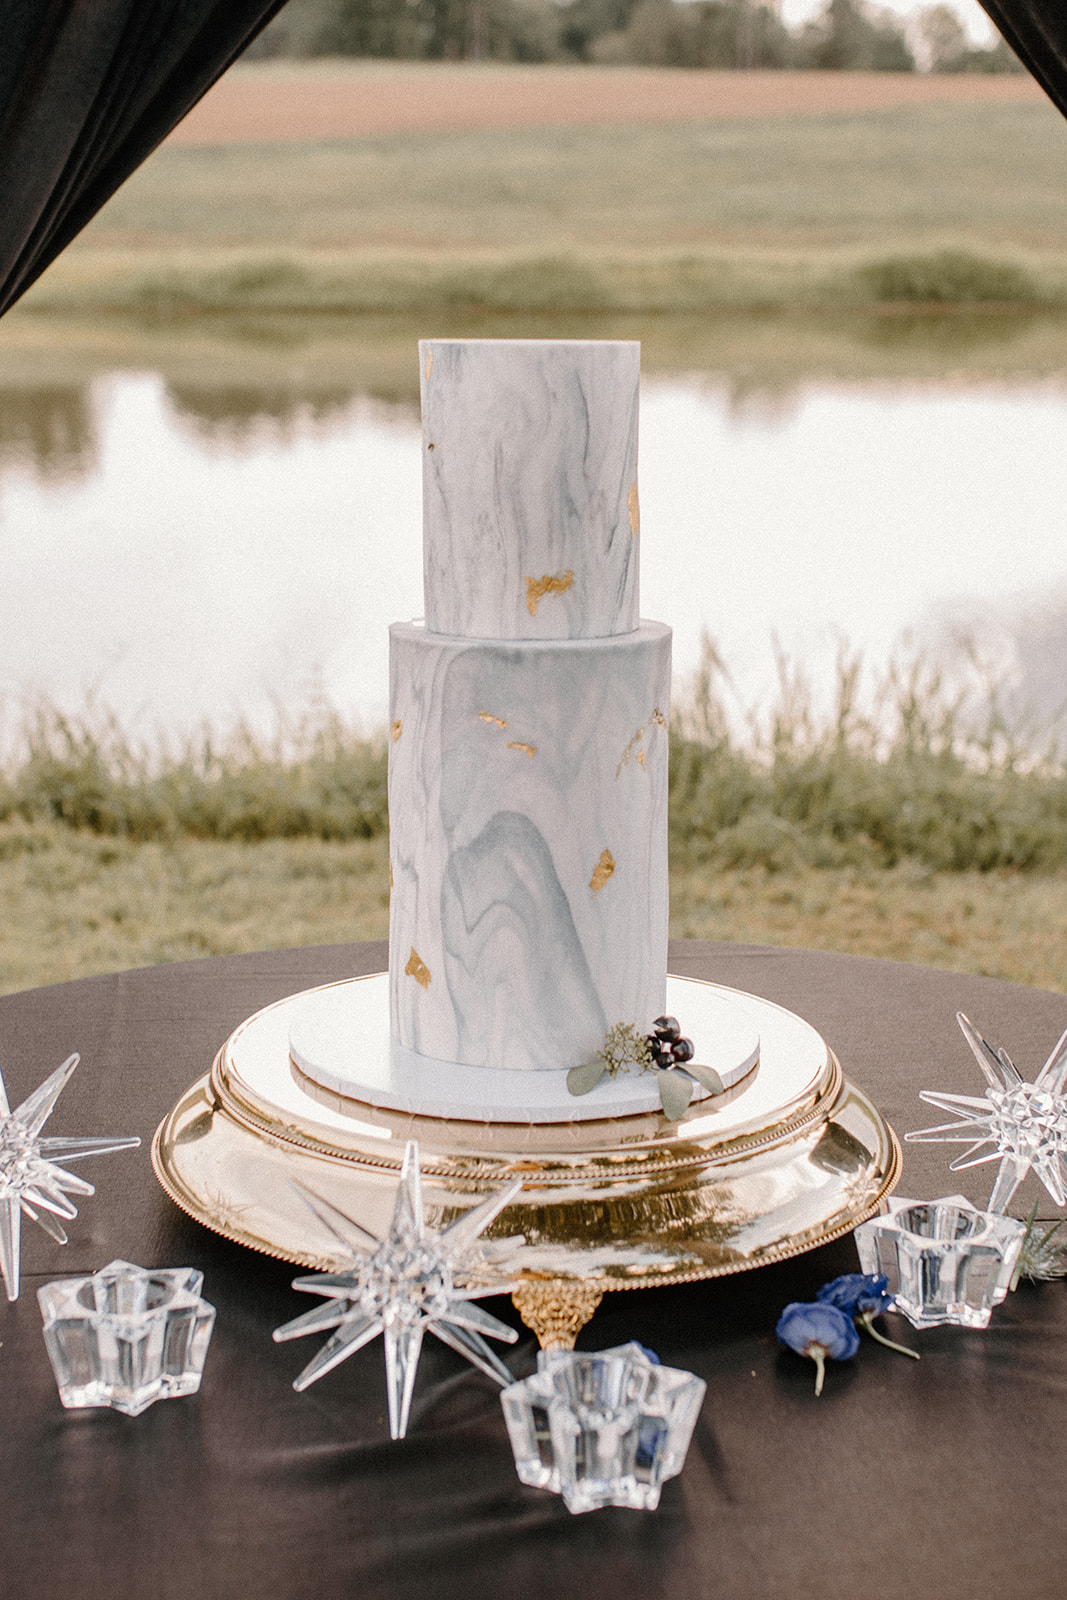 Celestial wedding cake design